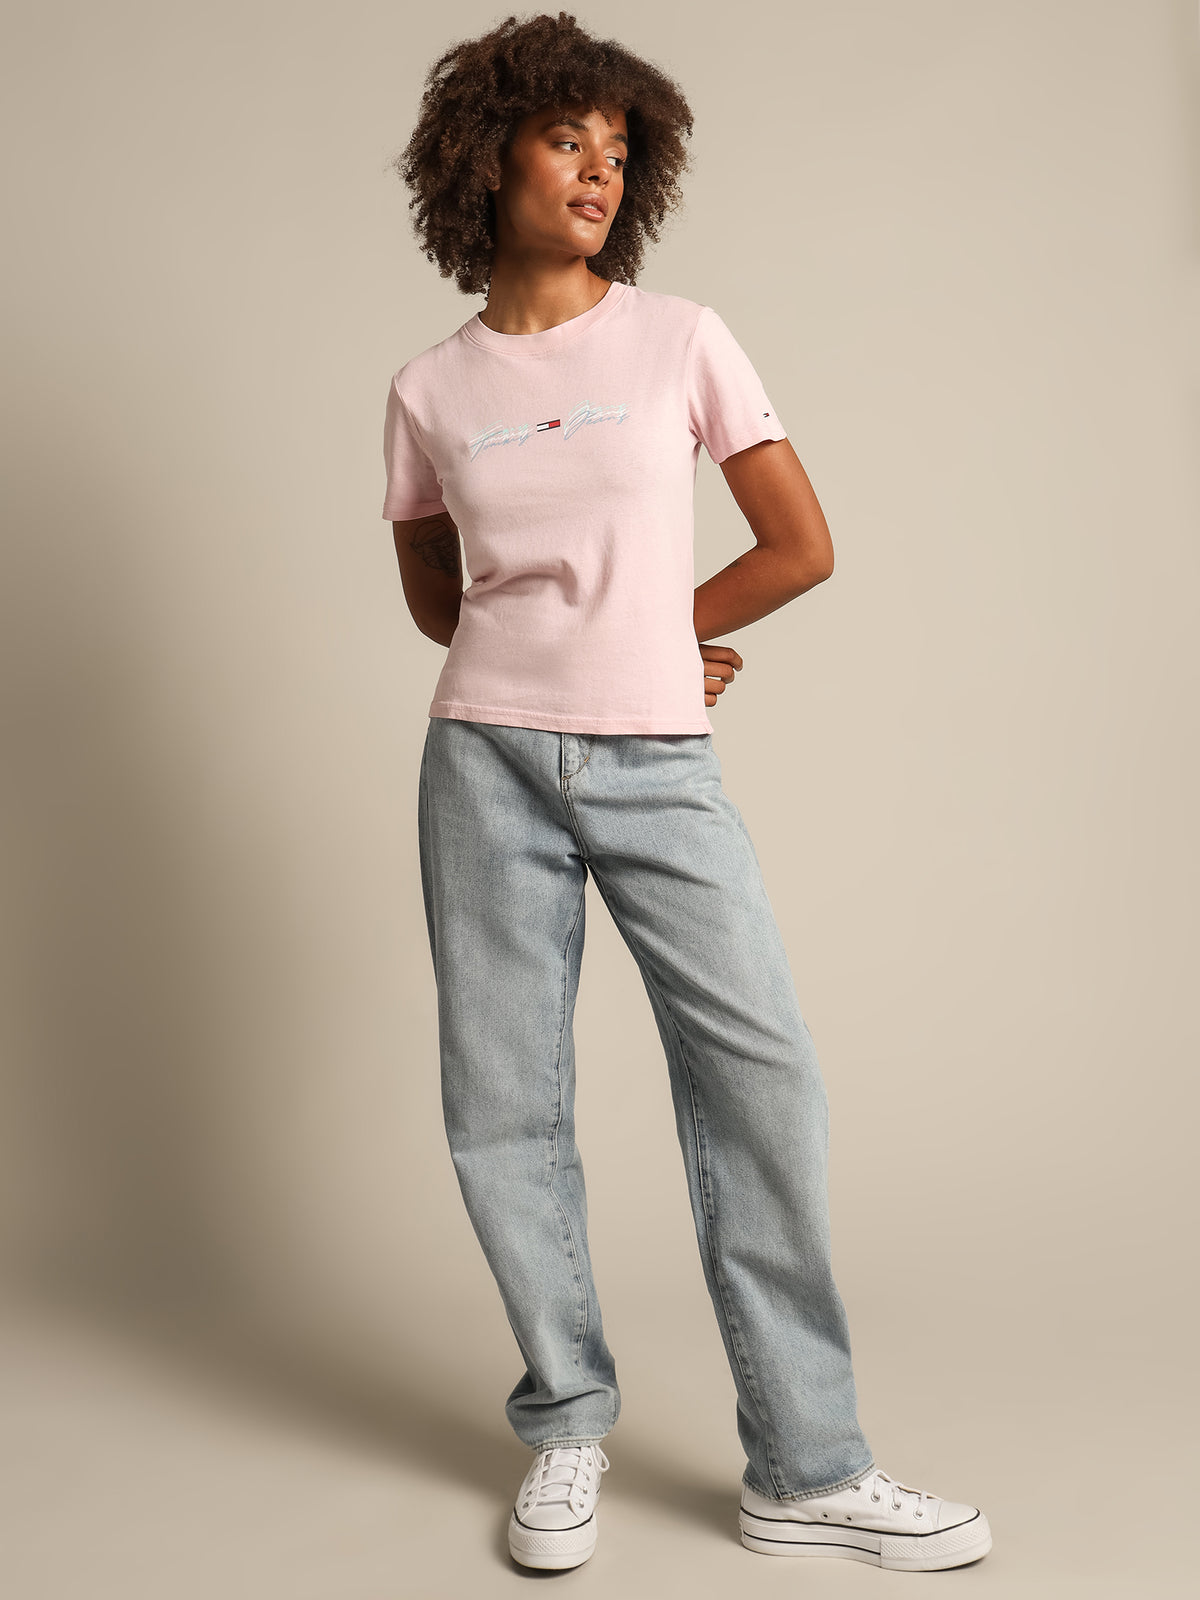 Linear Logo T-Shirt in Romantic Pink